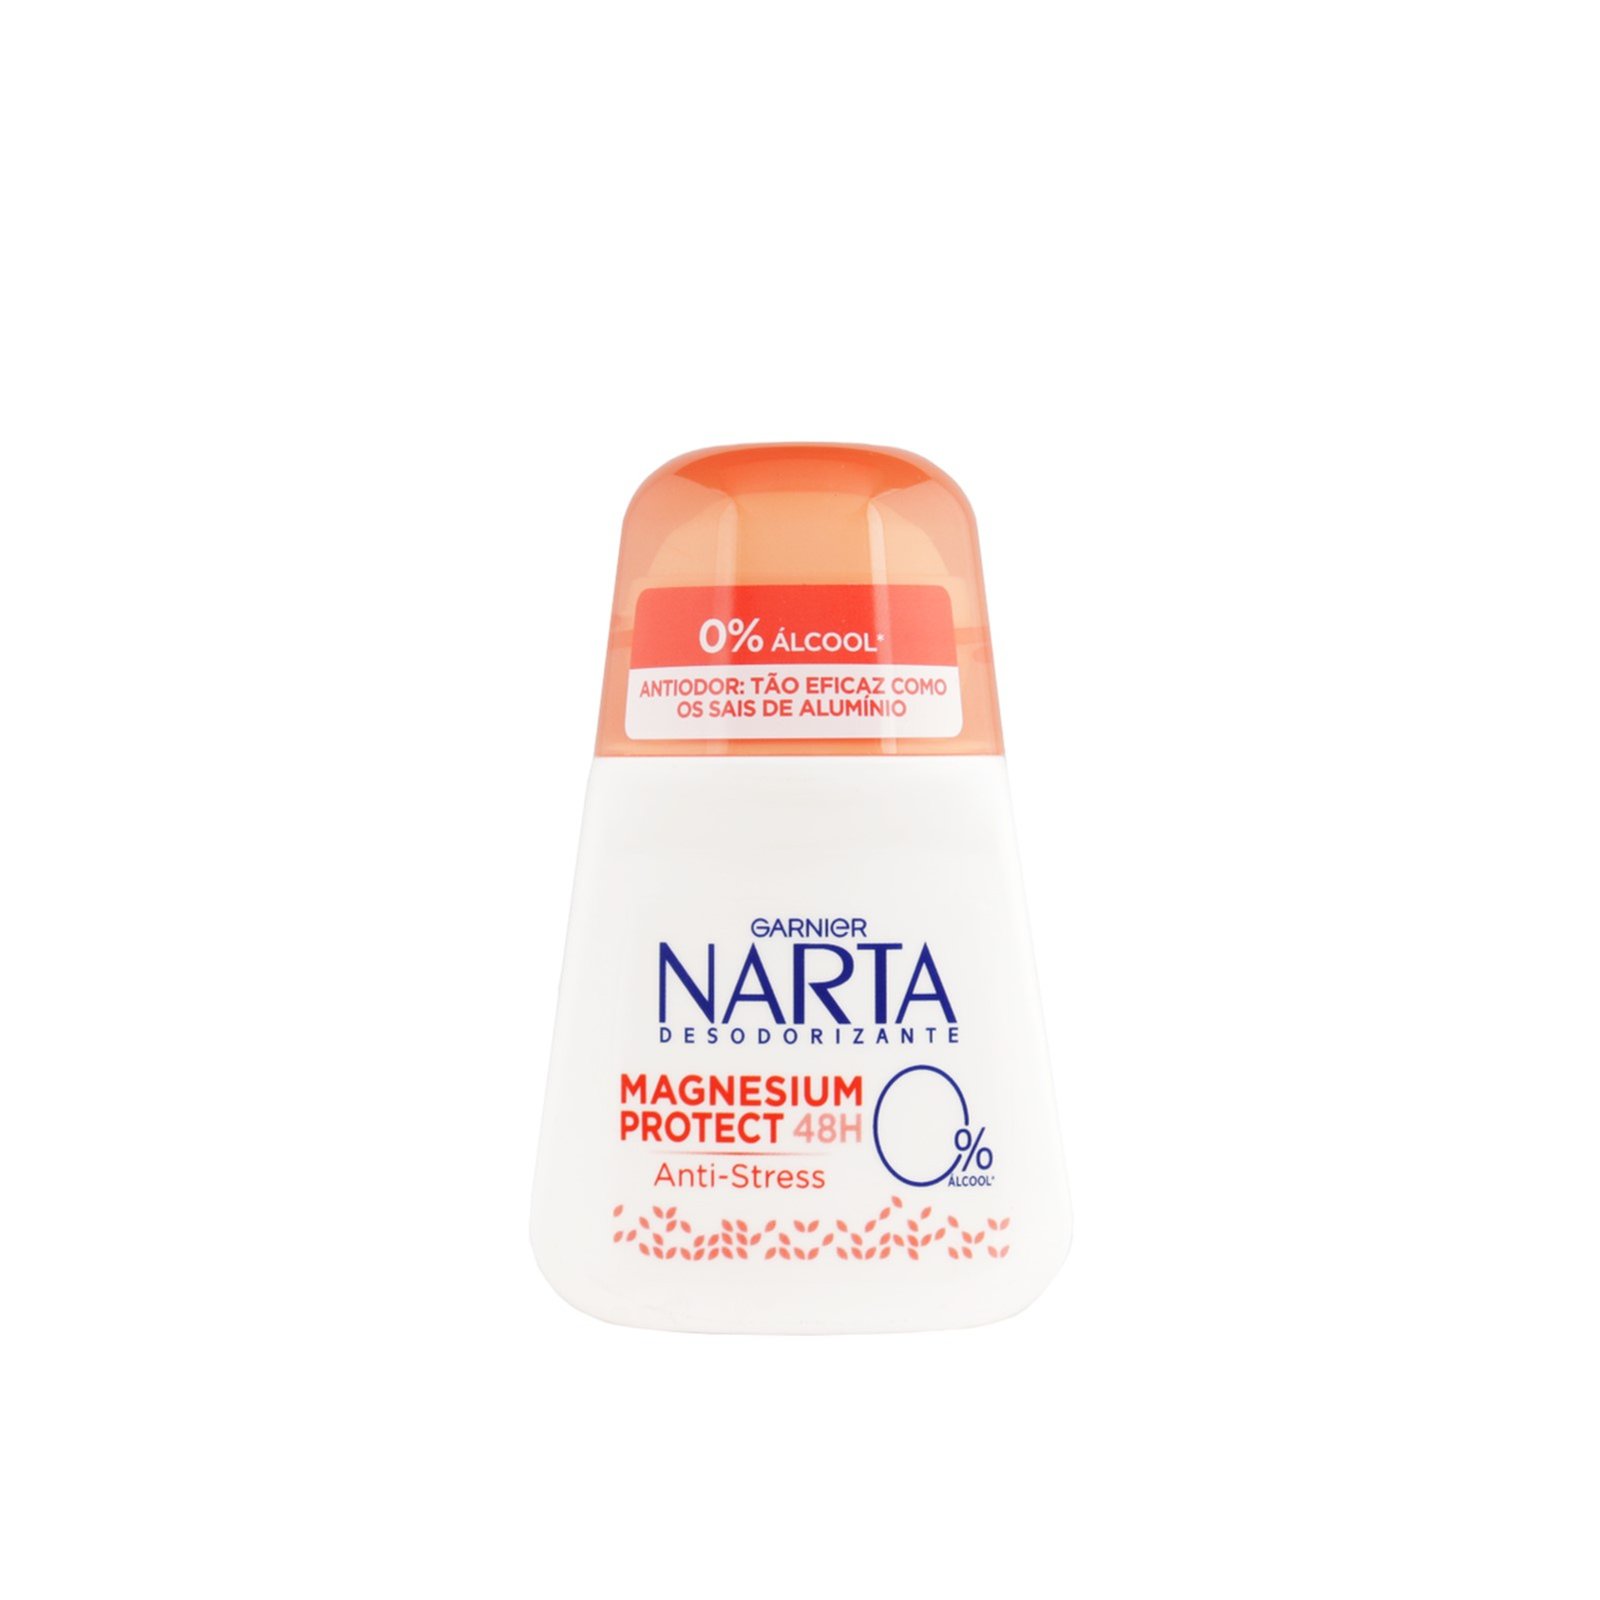 Garnier Narta Magnesium Protect 48h Anti-Stress Deodorant Roll-On 50ml (1.69fl oz)